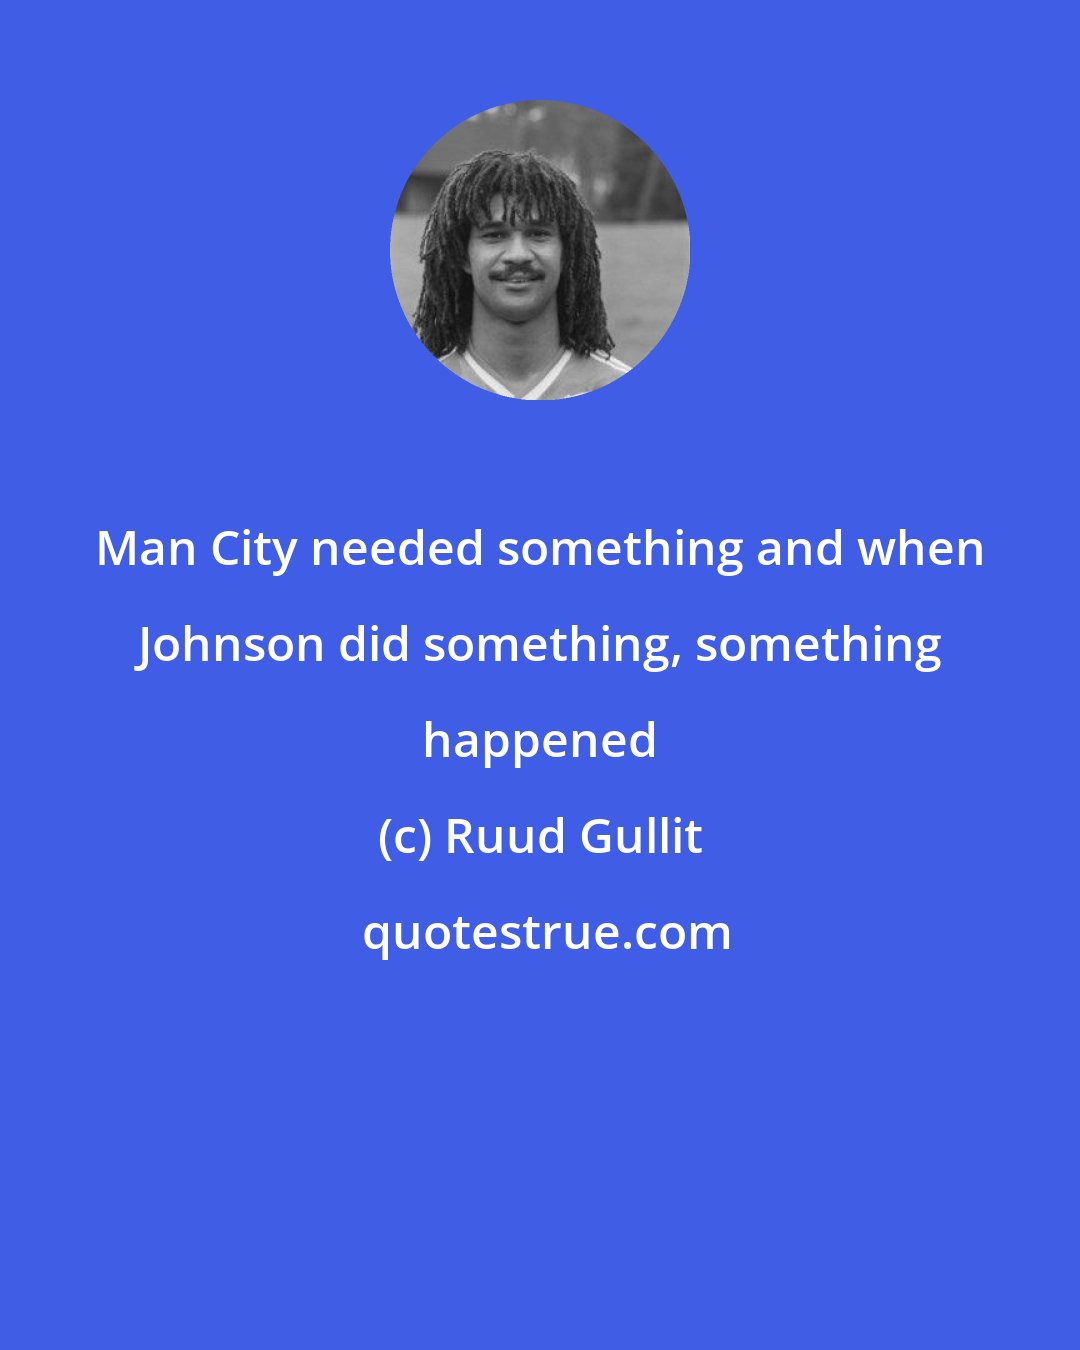 Ruud Gullit: Man City needed something and when Johnson did something, something happened